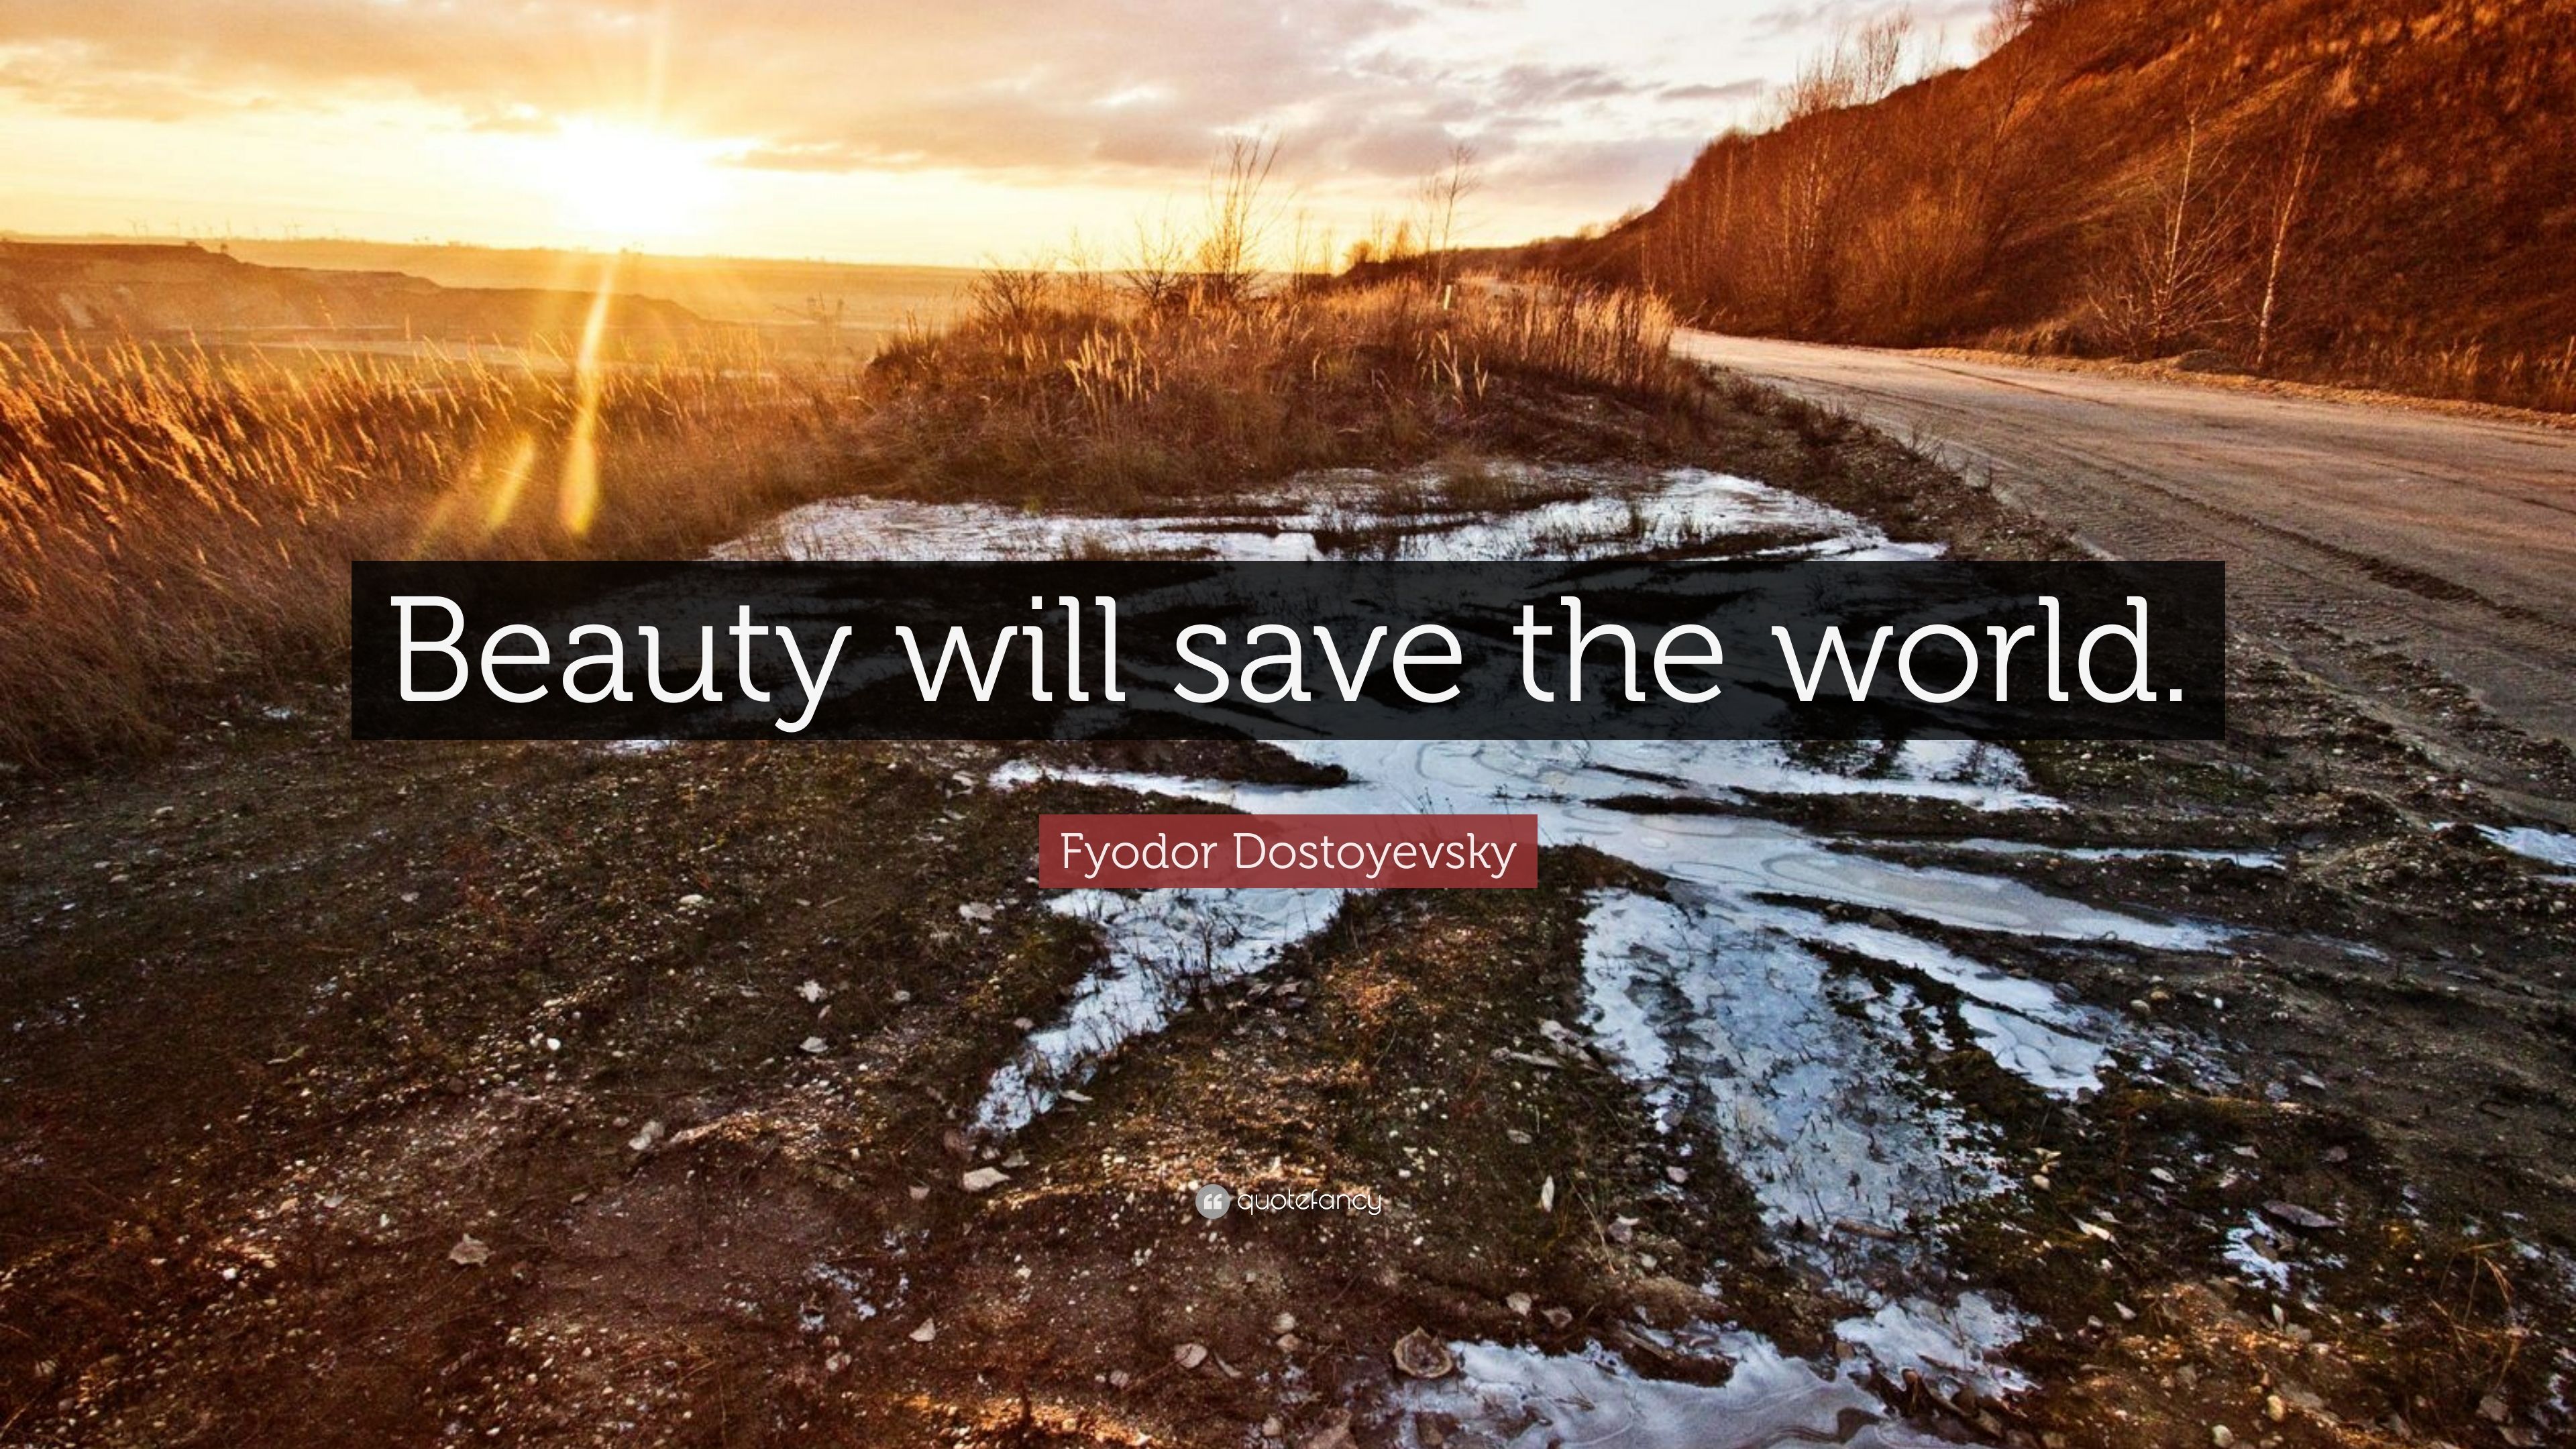 Fyodor Dostoyevsky Quote: “Beauty will save the world.” 12